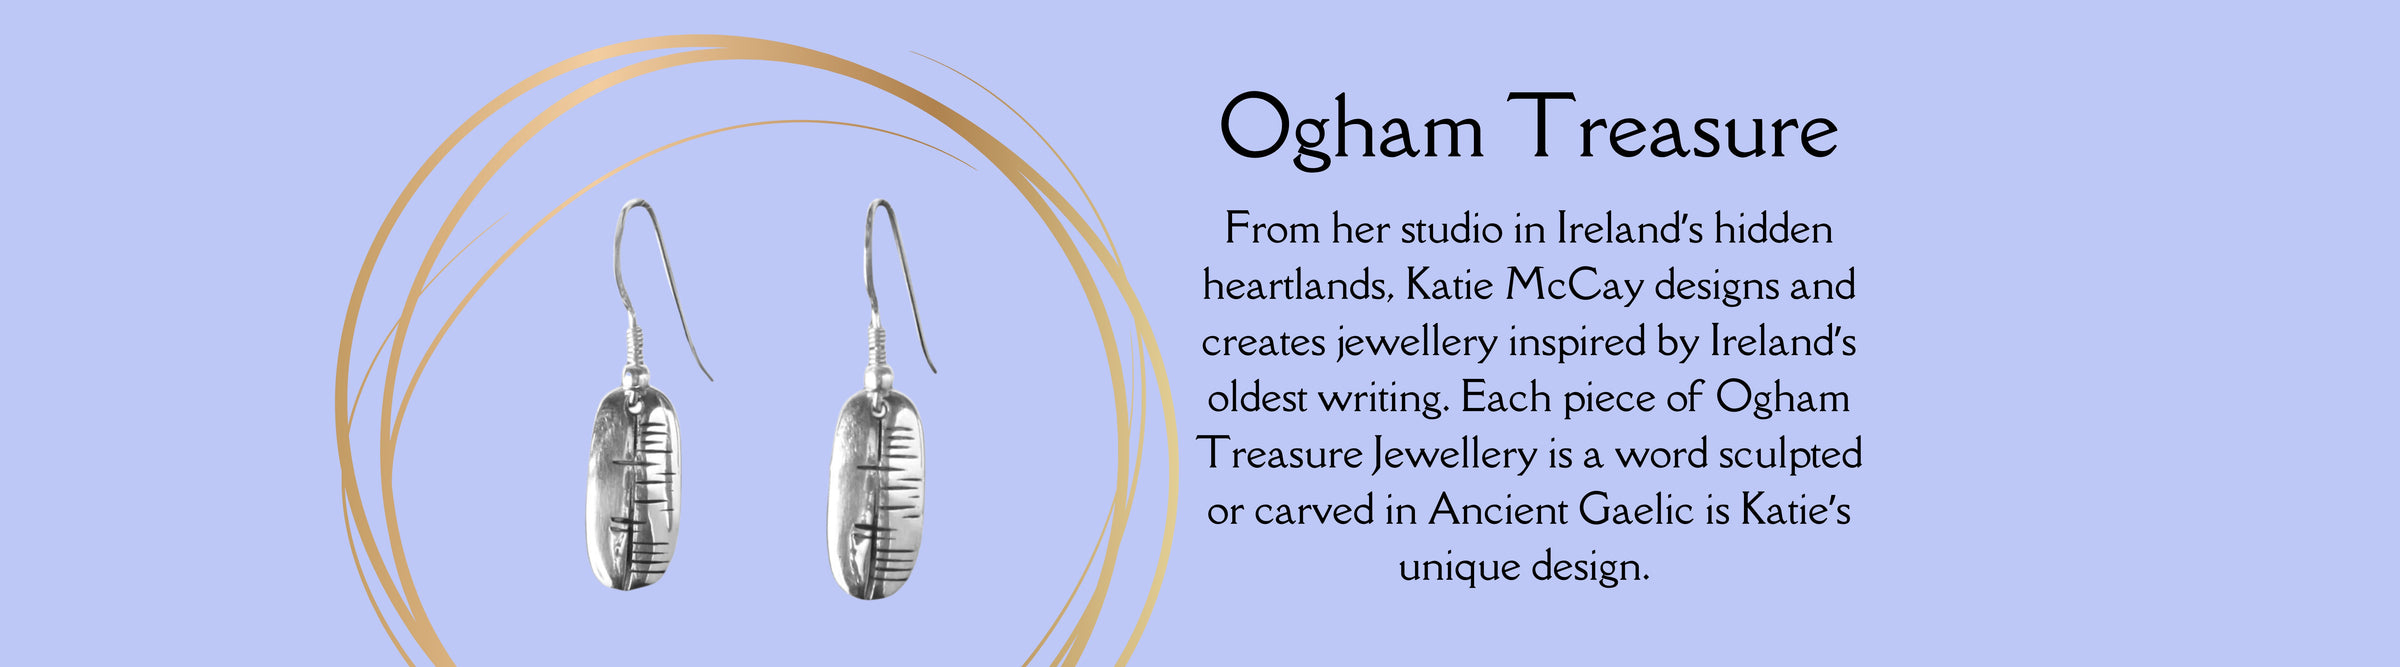 Ogham Treasure